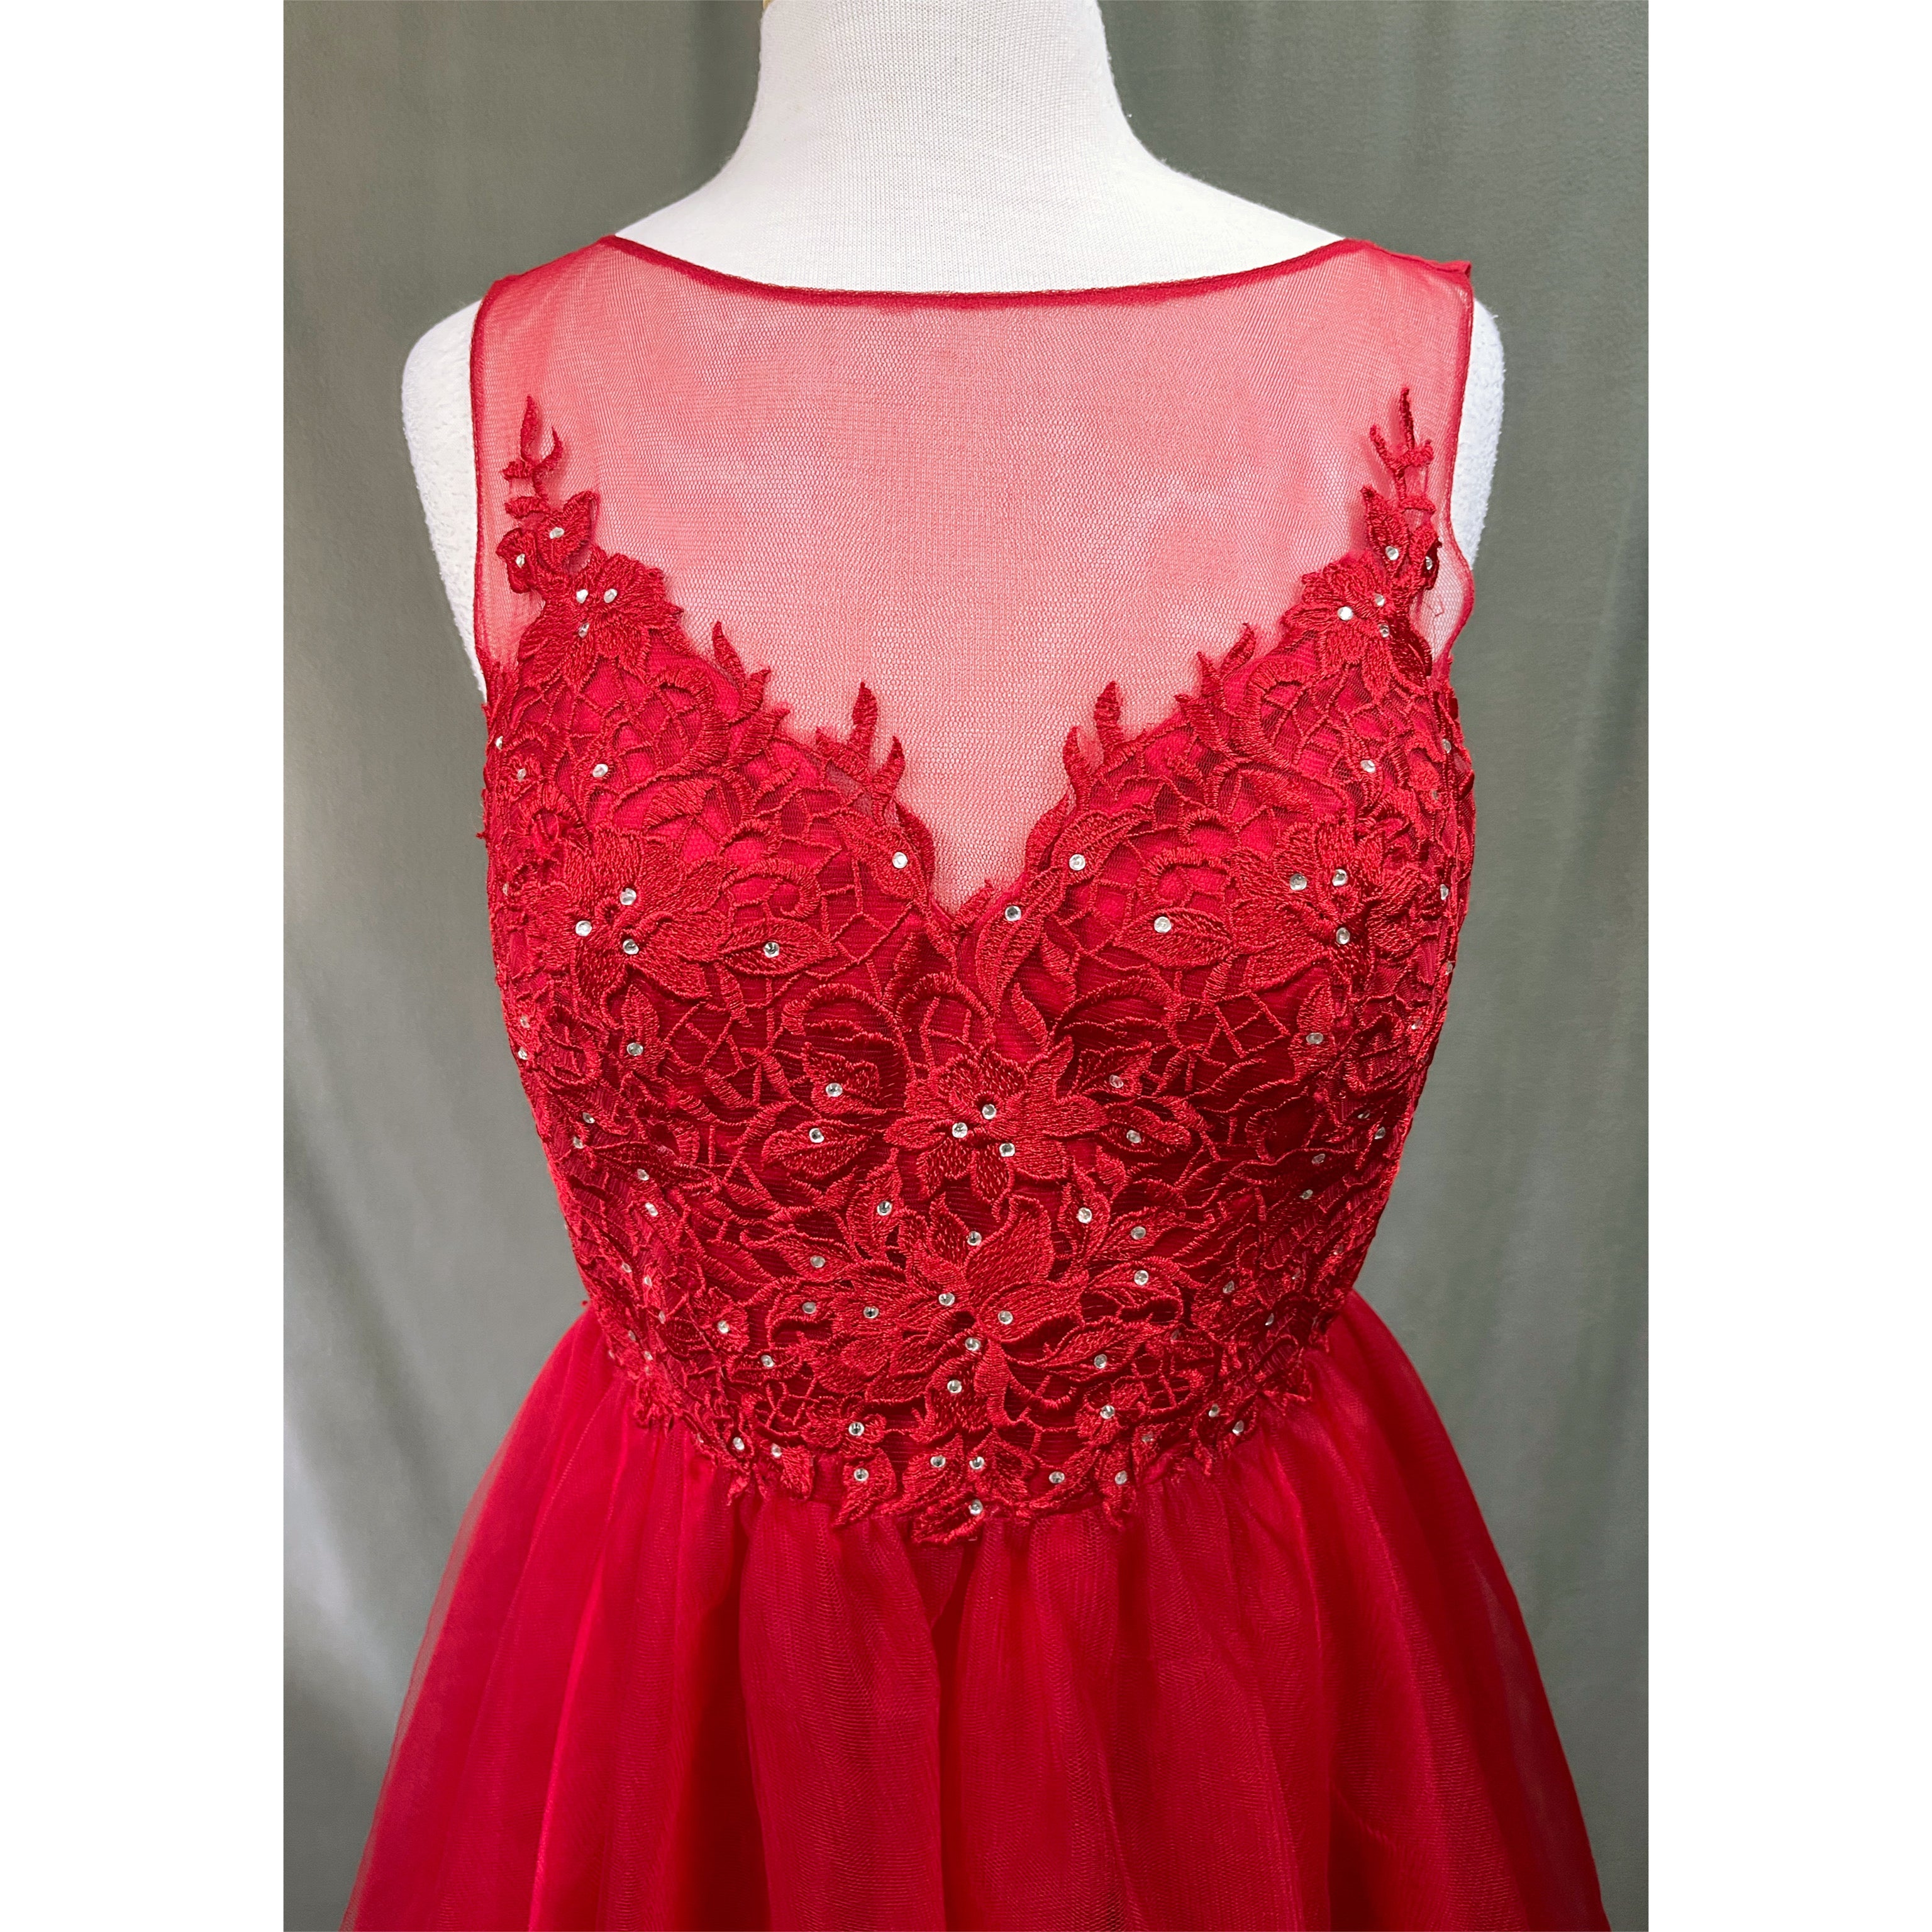 Coya red dress, size L